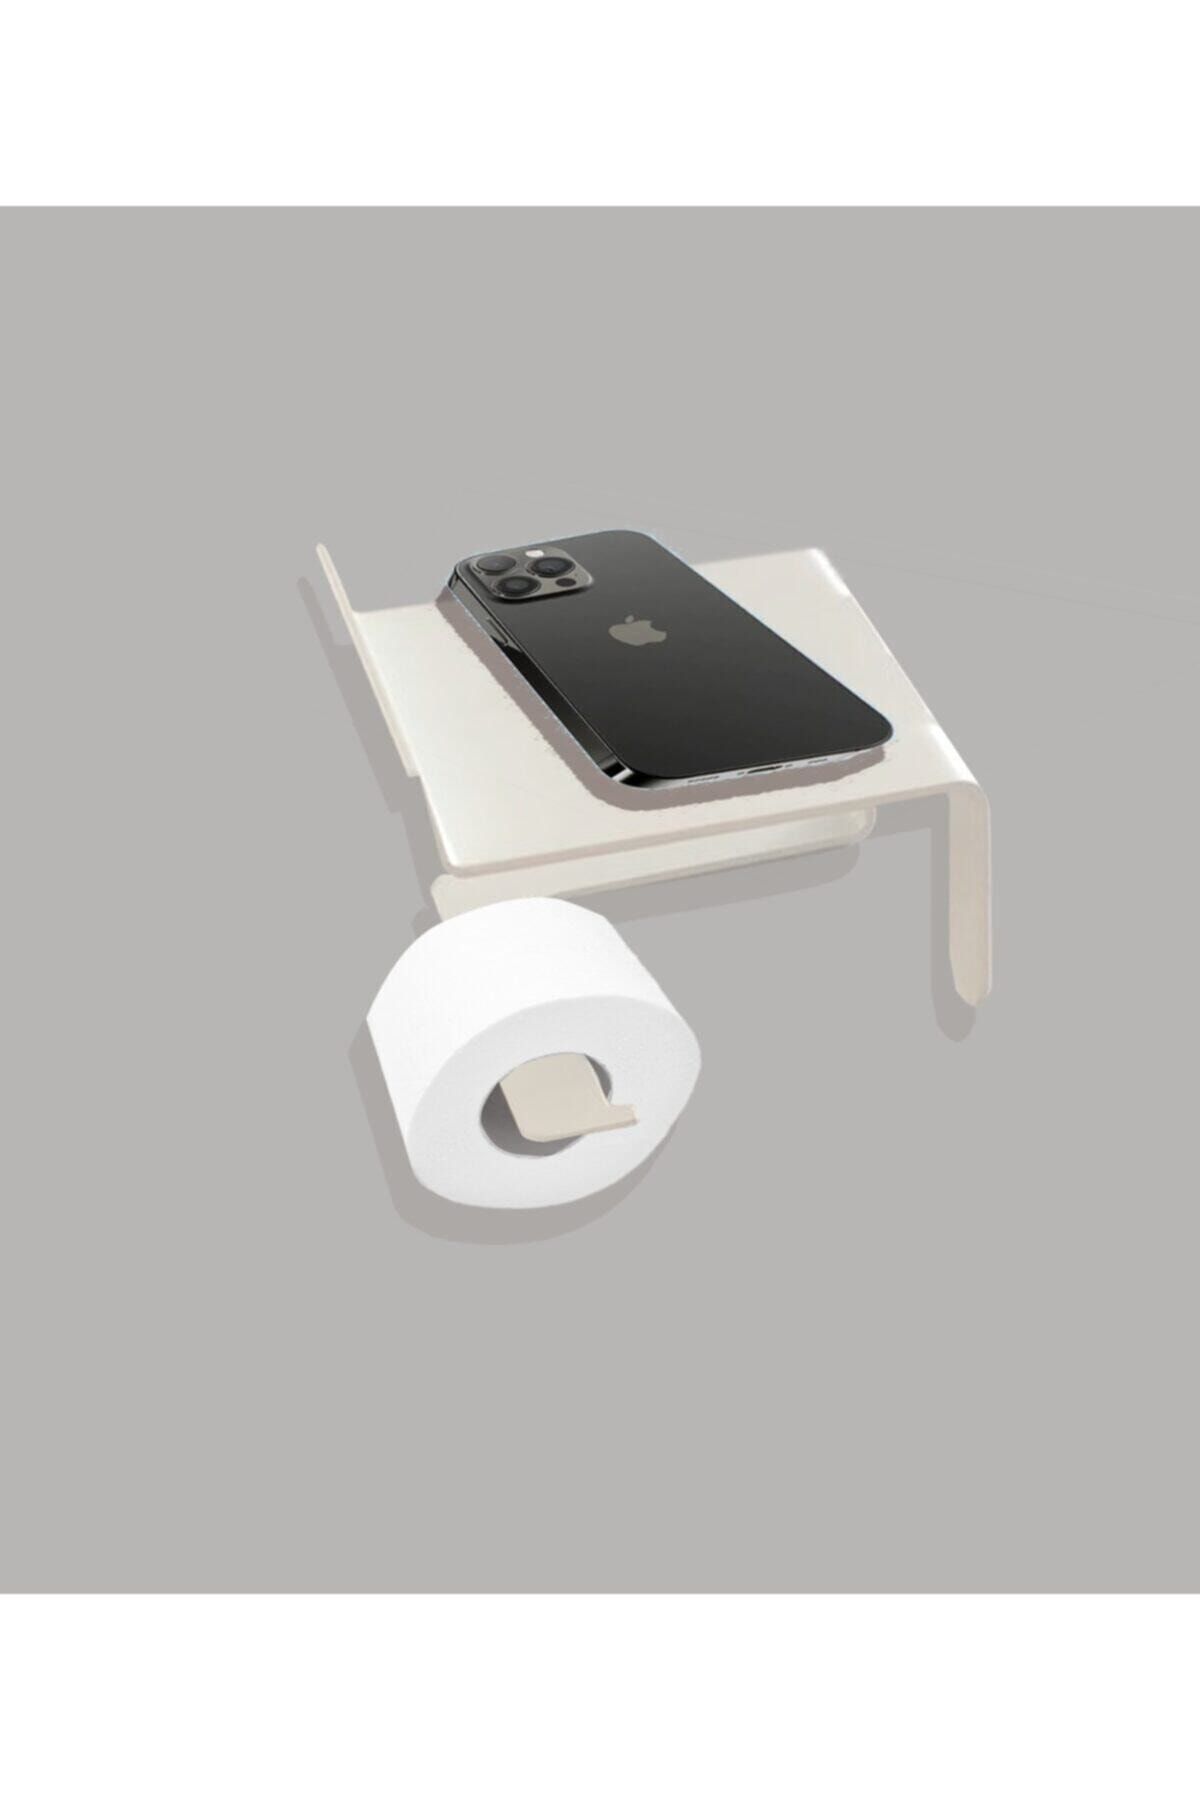 Hobi Demir Sanat Beyaz Telefon Raflı Tuvalet Kağıtlığı Cep Telefonu Tutmalı Raflı Wc Kağıtlık